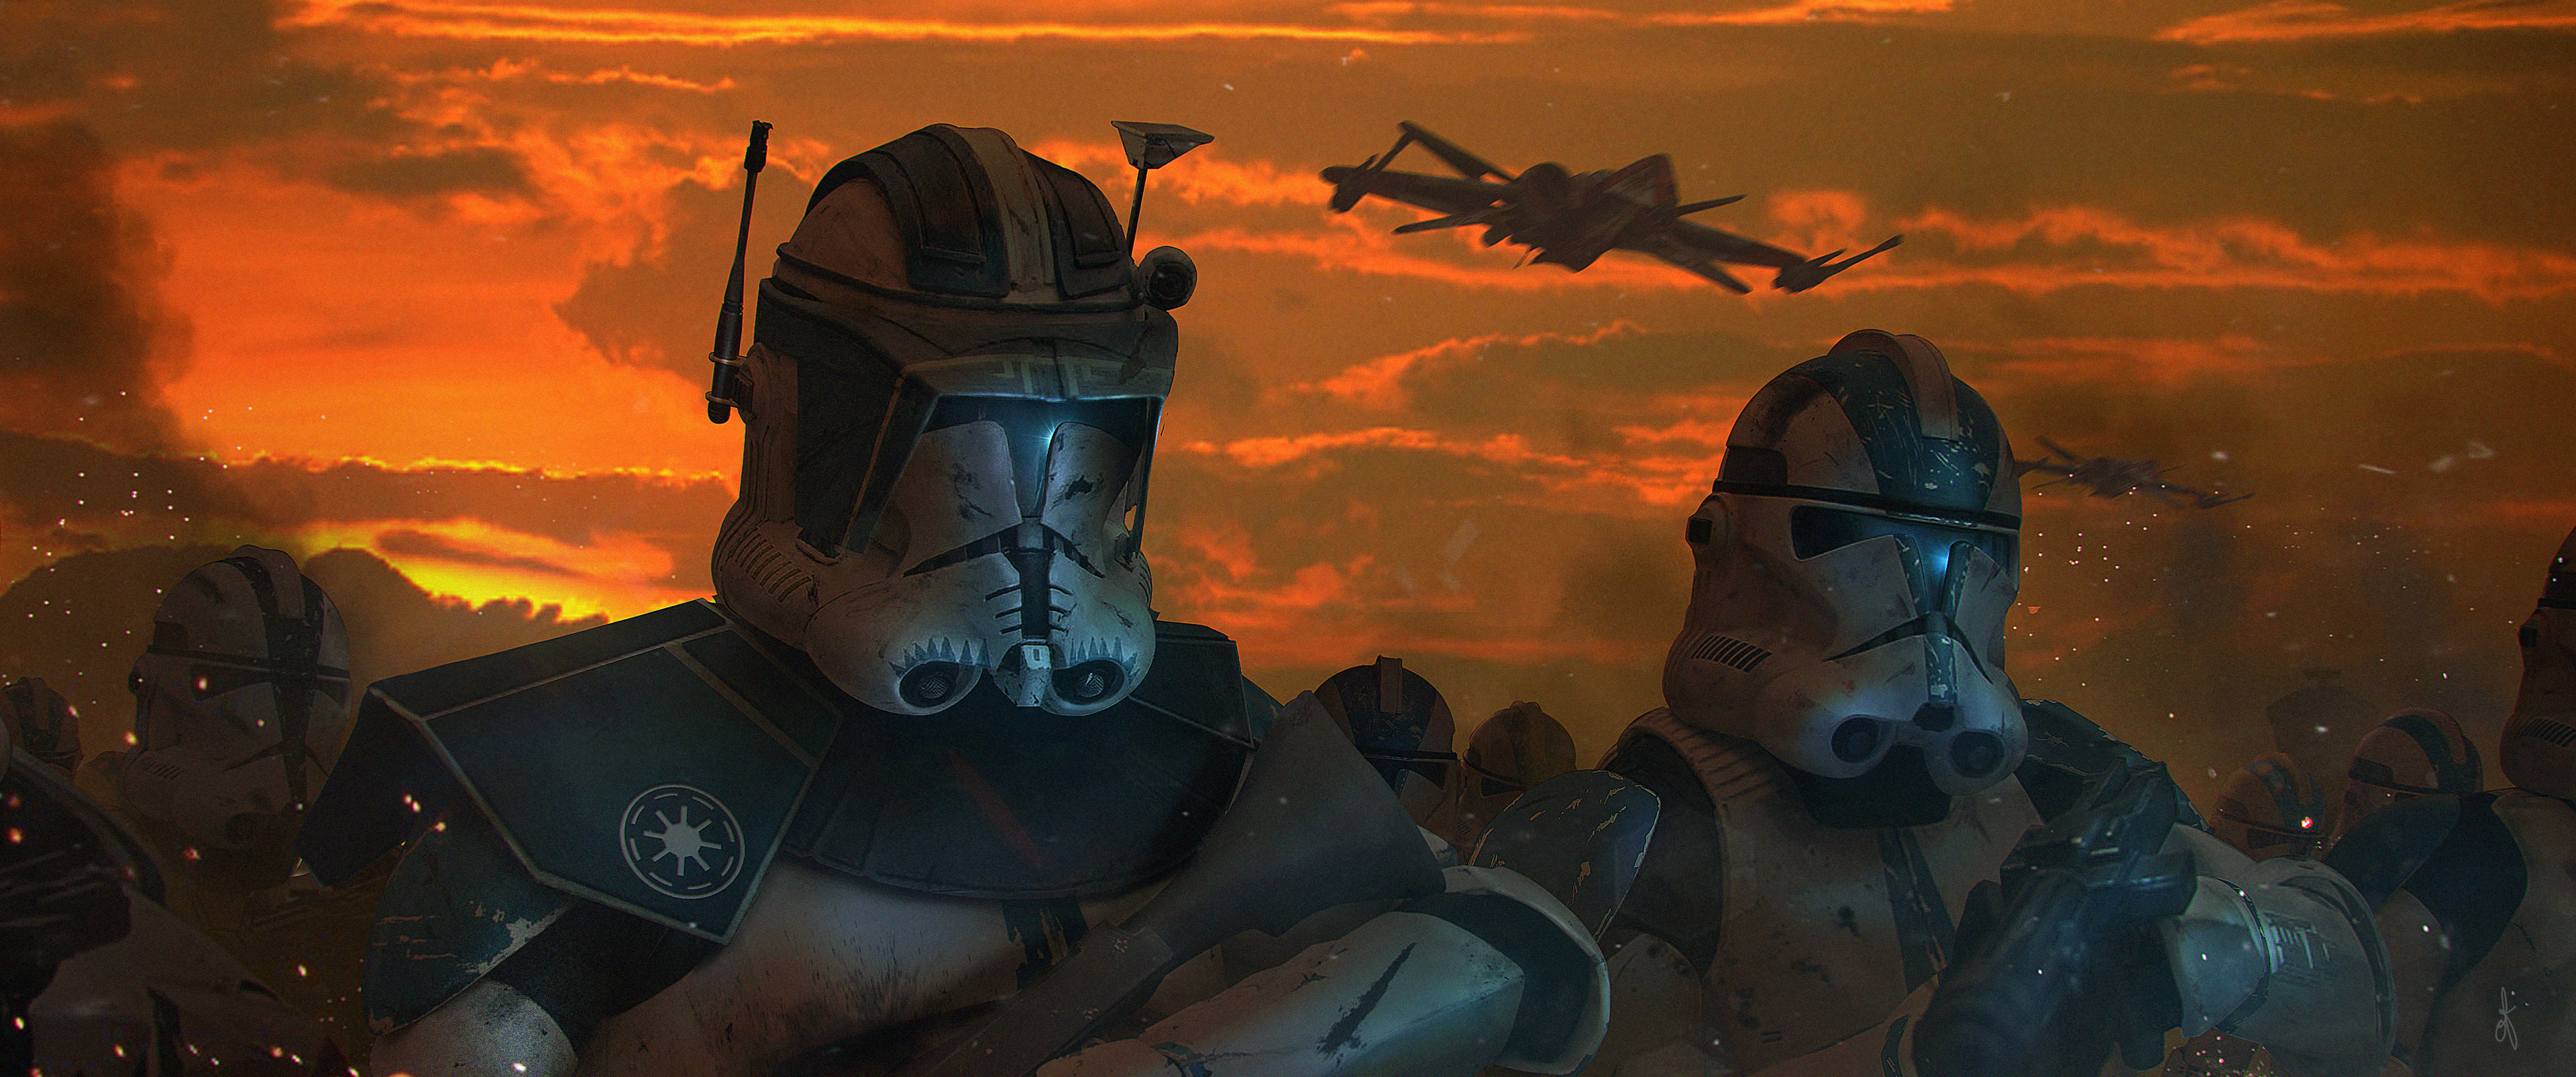 General 3840x1606 science fiction Star Wars clones 501st stormtrooper digital art low light ultrawide